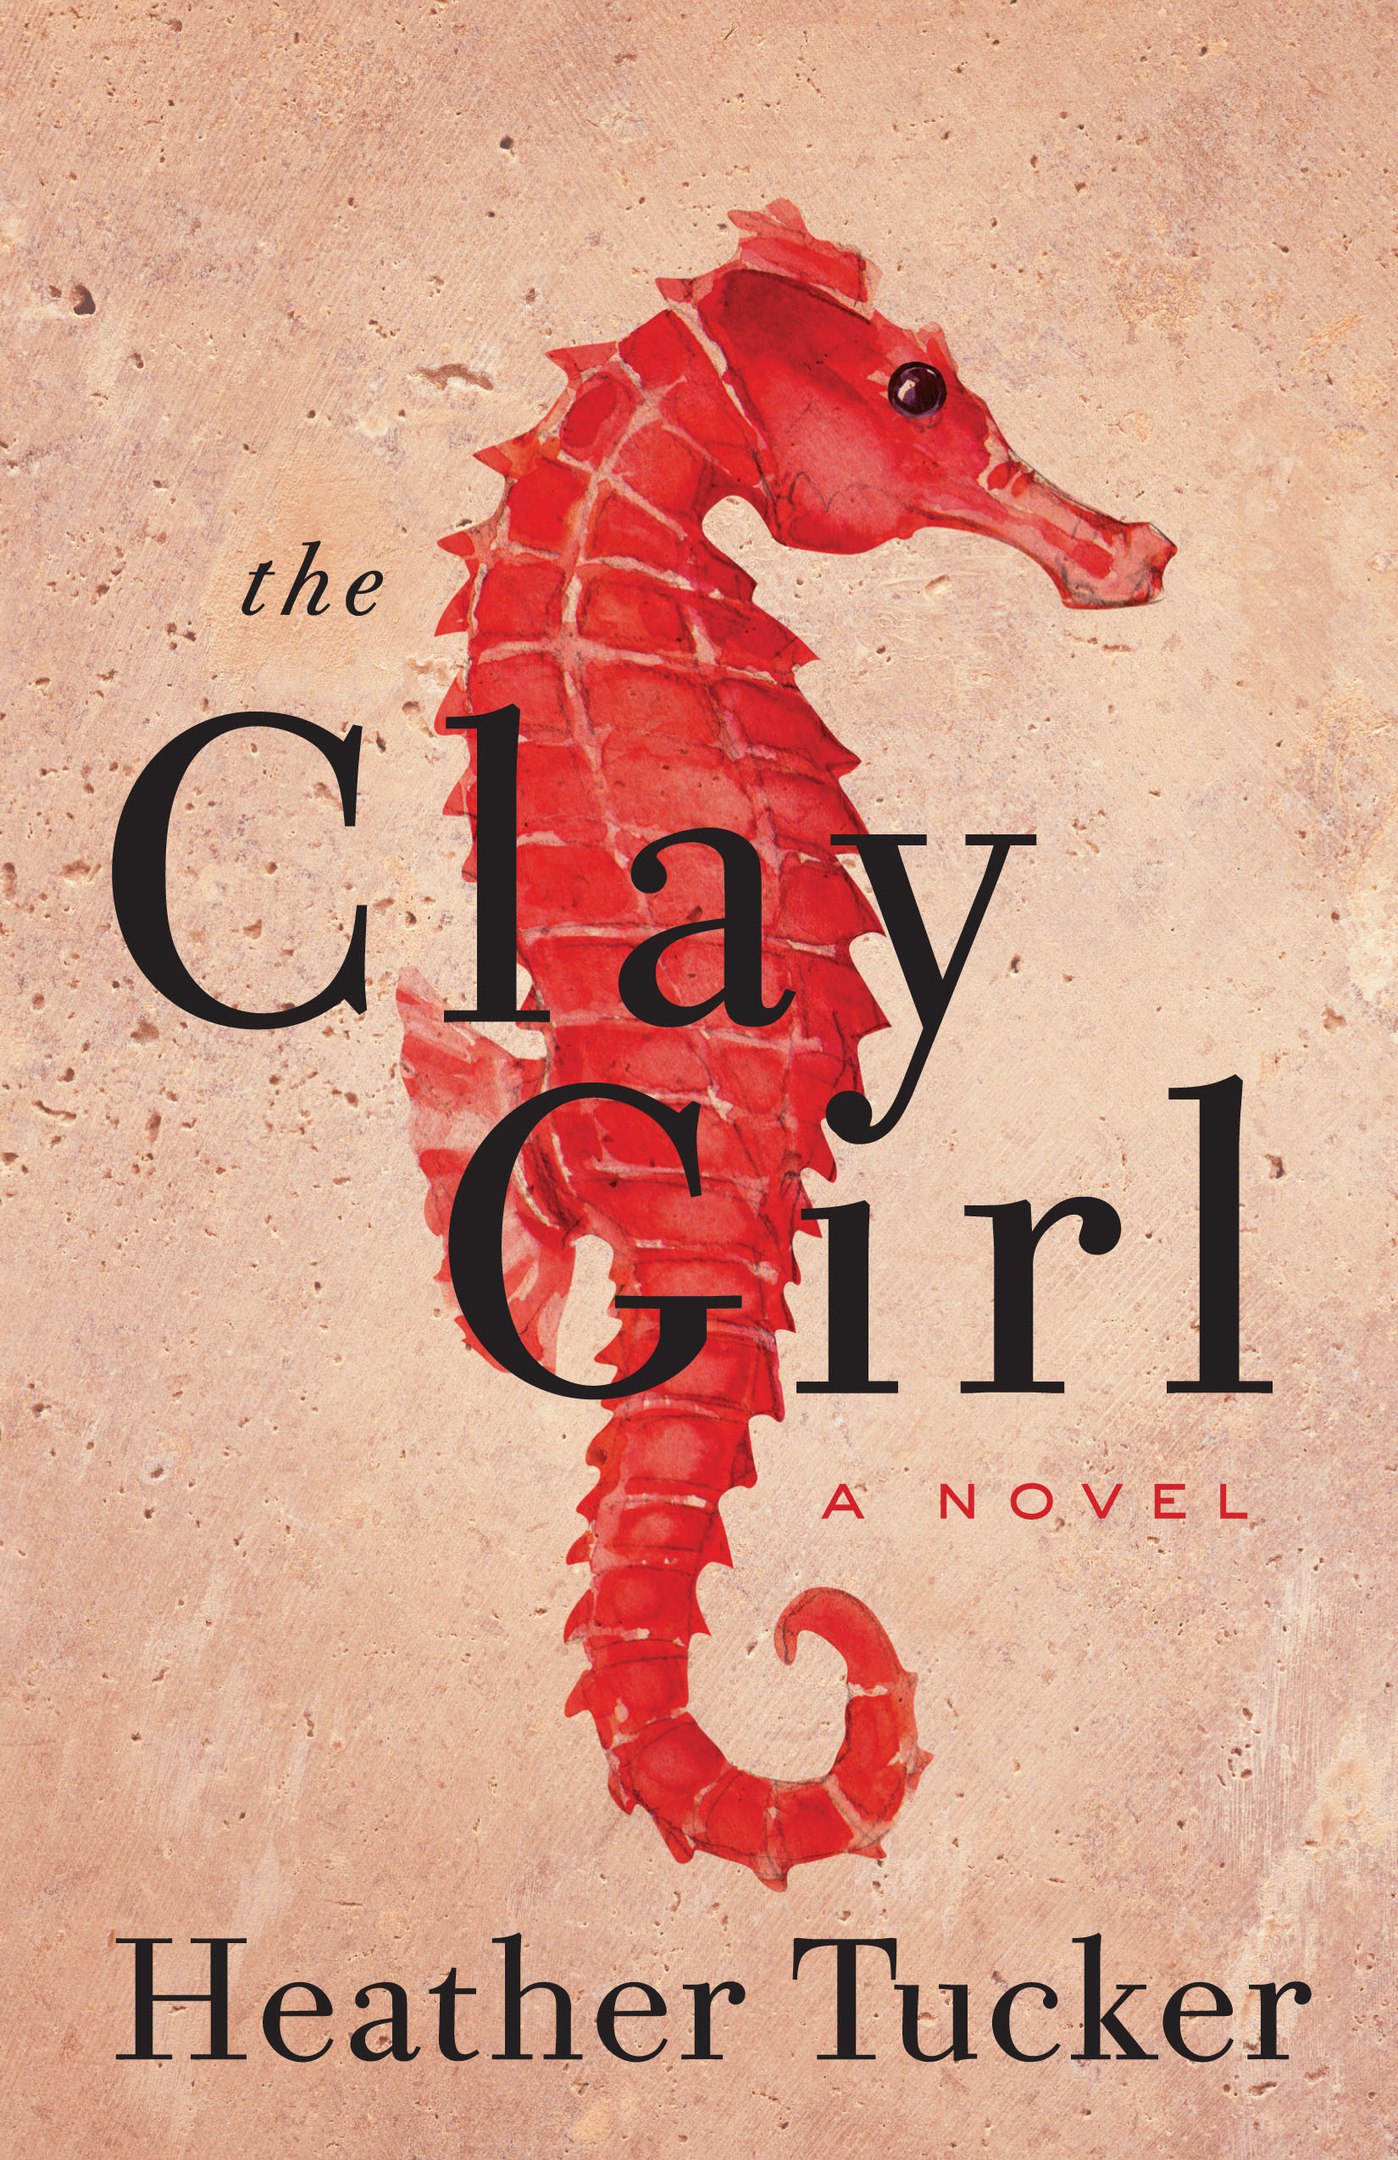 Heather Tucker – The Clay Girl